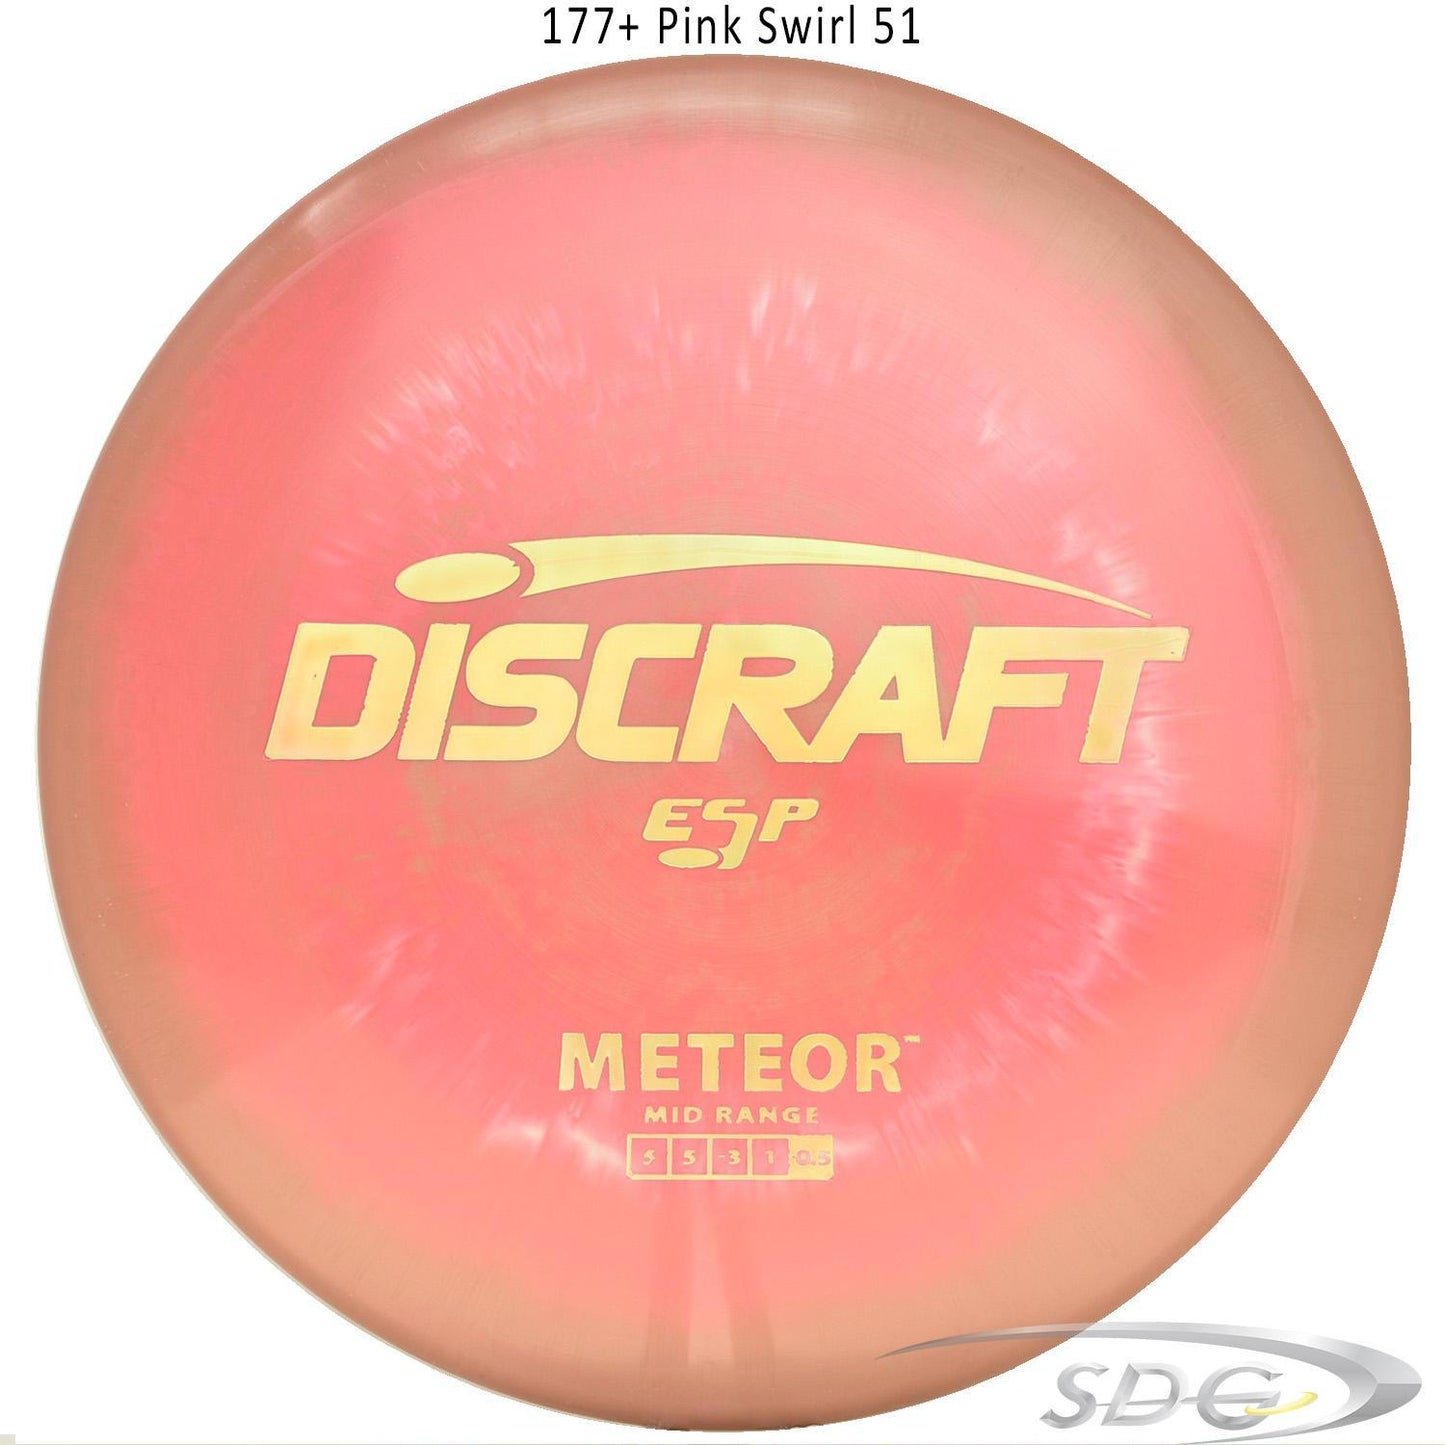 discraft-esp-meteor-disc-golf-mid-range 177+ Pink Swirl 51